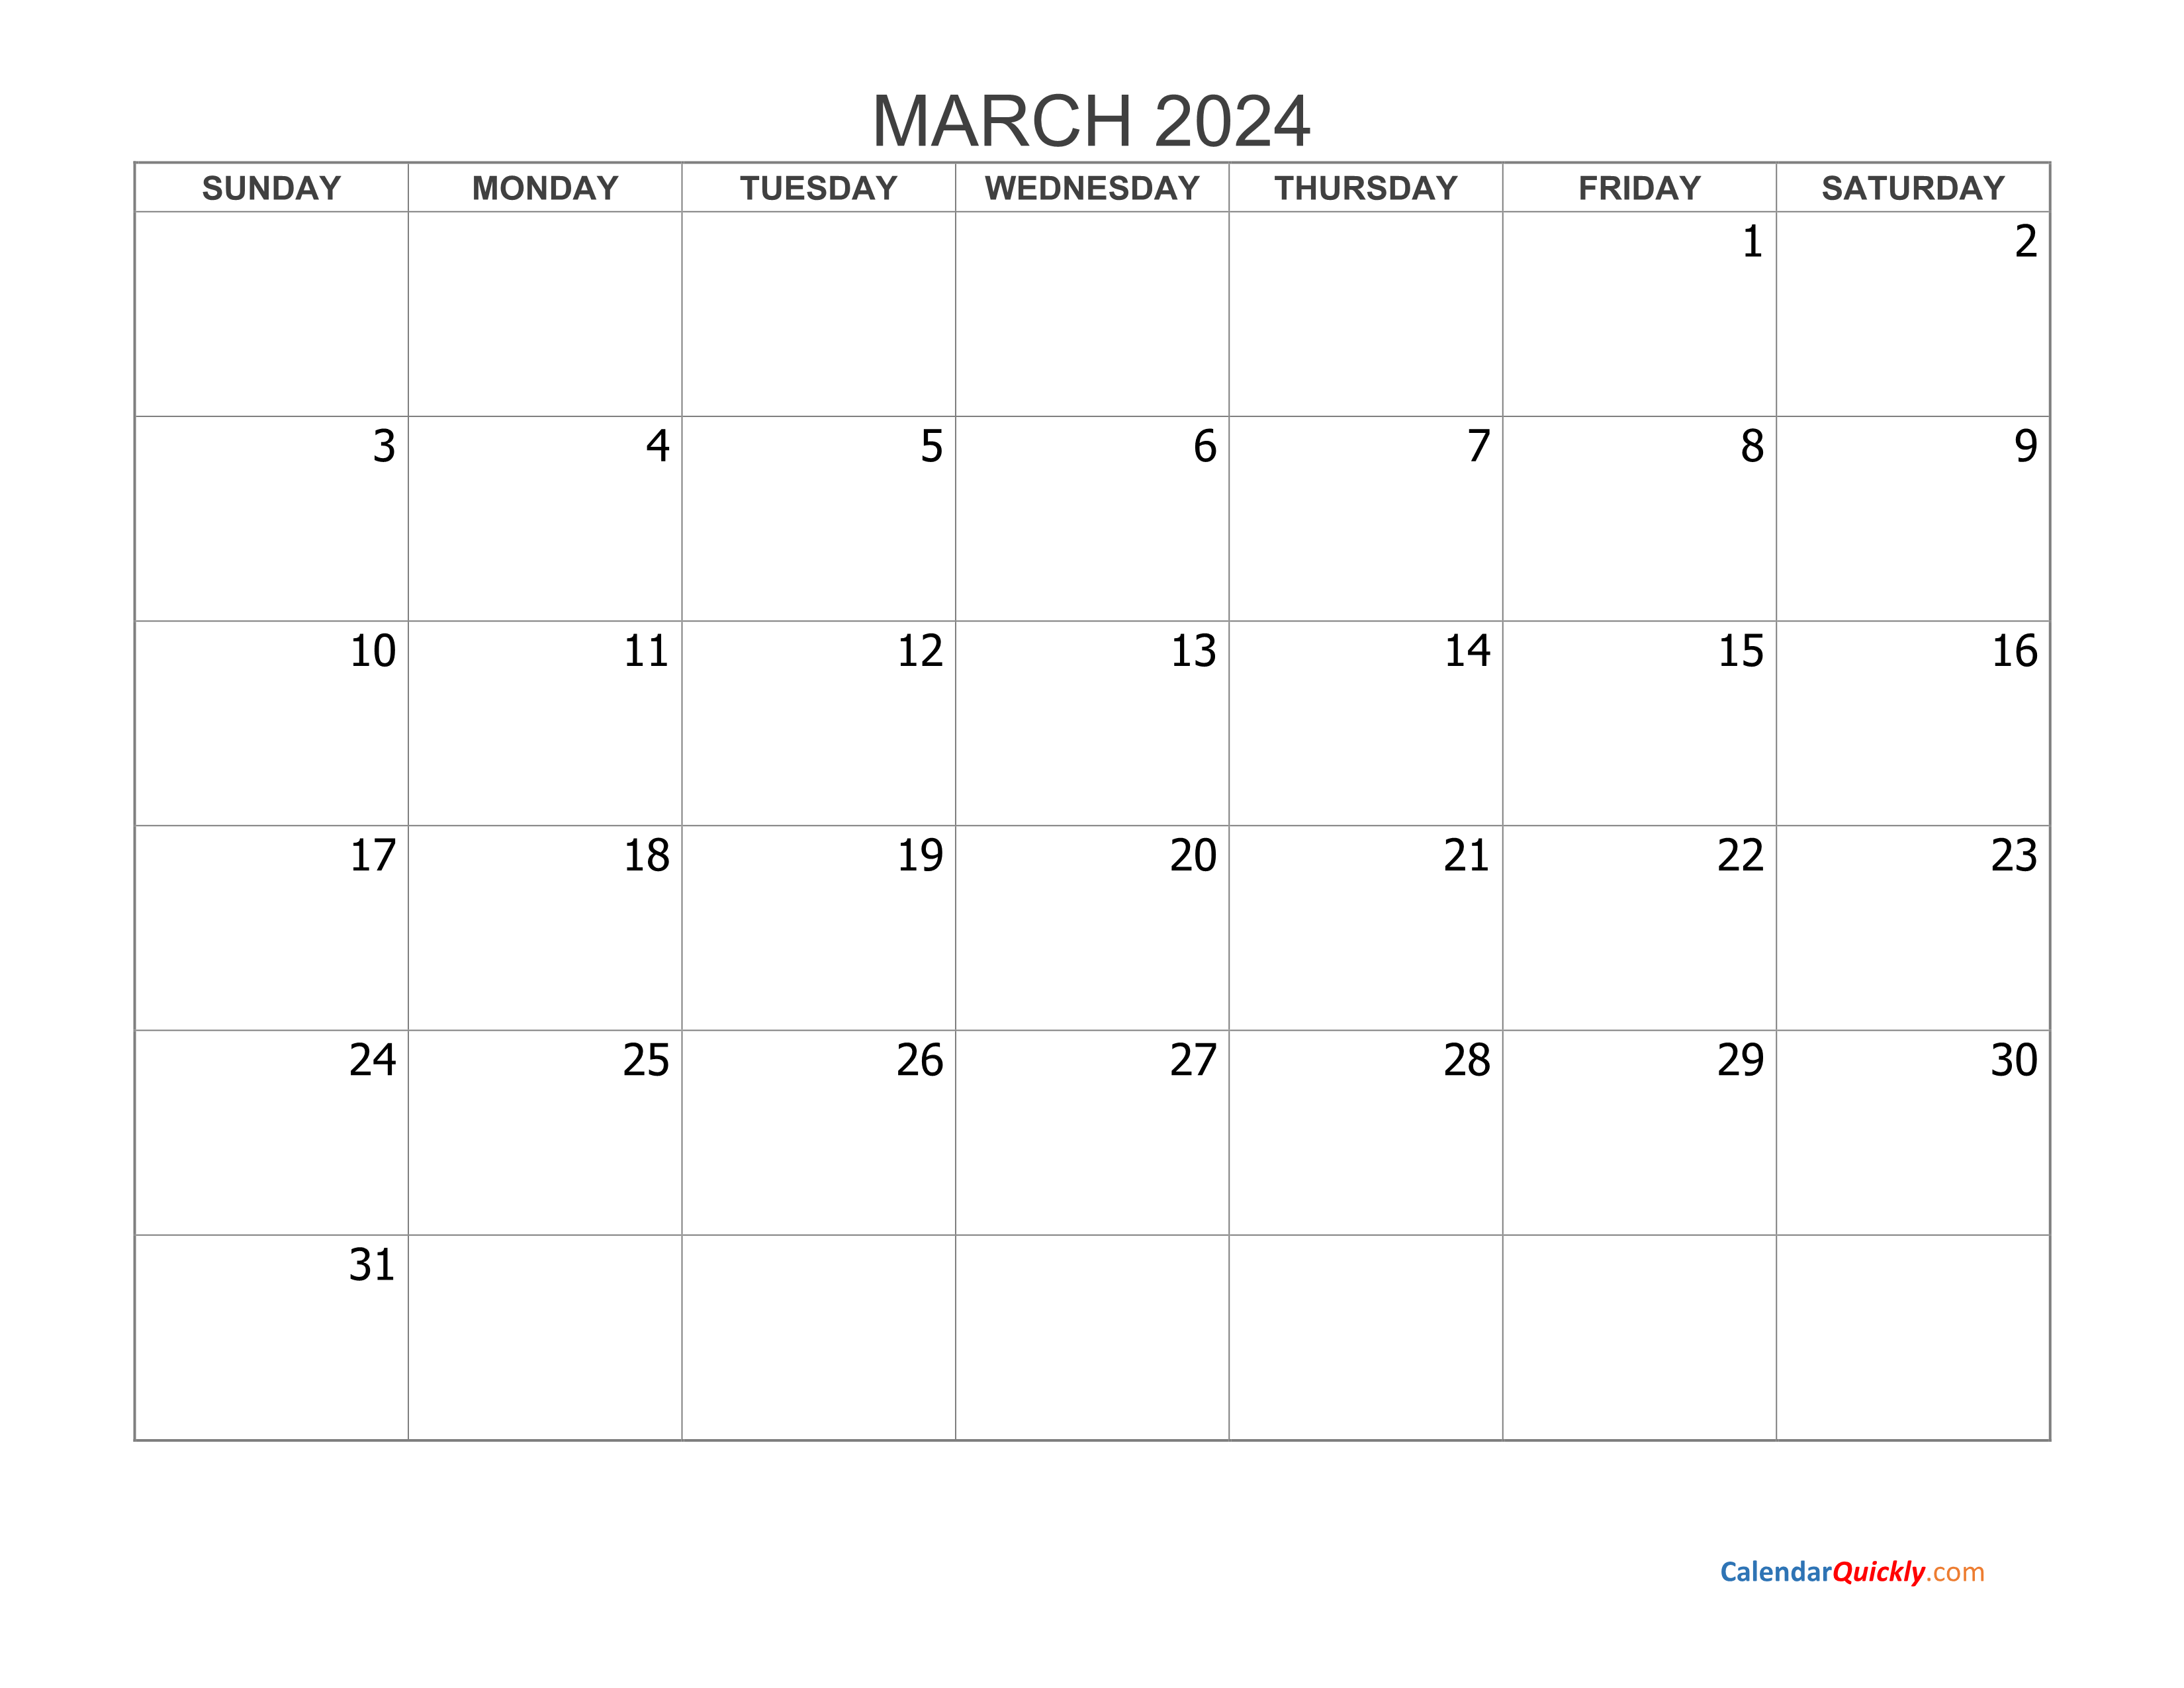 March 2024 Blank Calendar Calendar Quickly